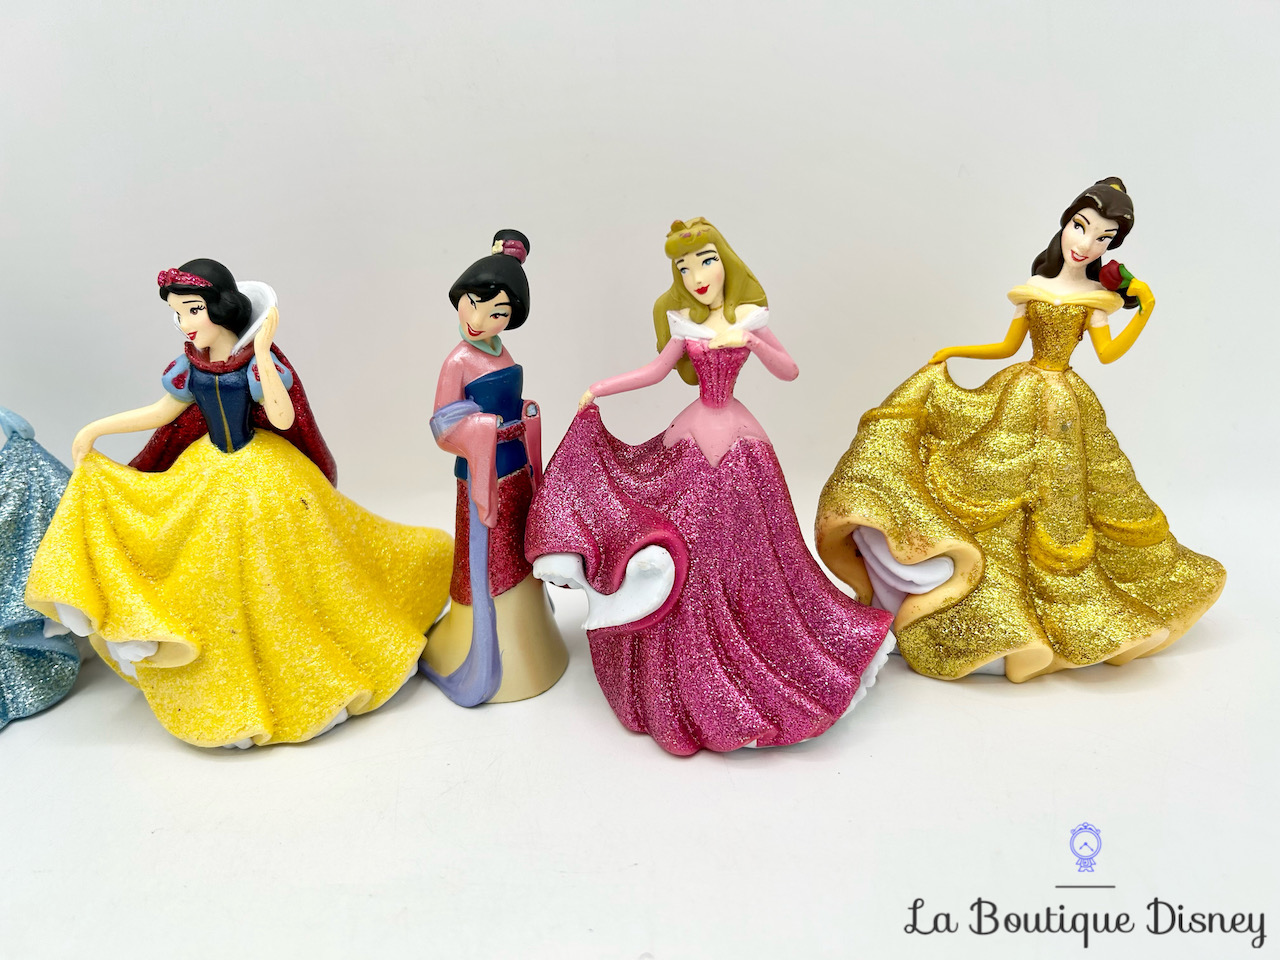 Coffret Deluxe 11 figurines princesses DISNEY BABY : Comparateur